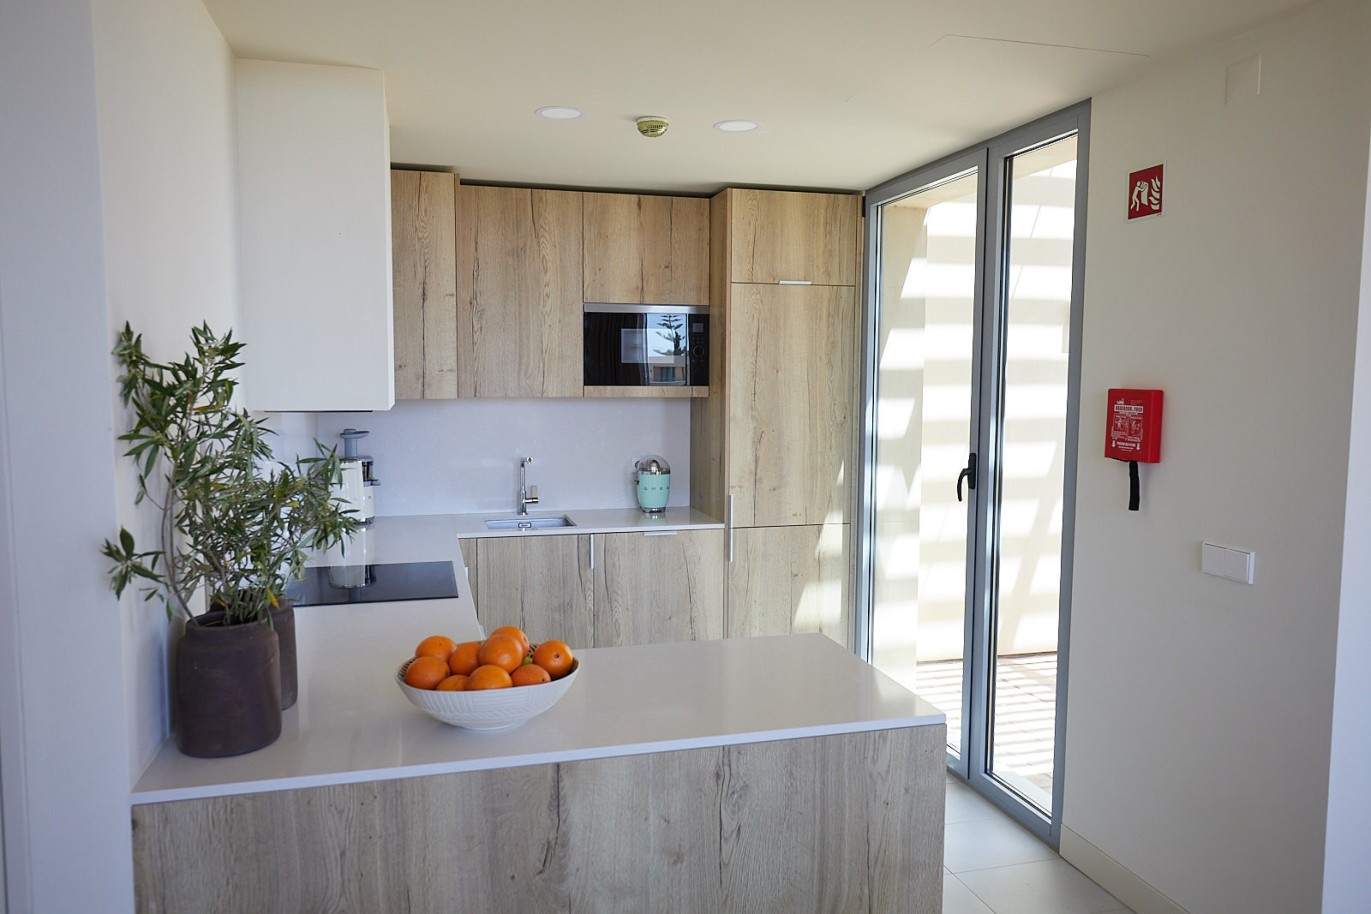 3 bedroom apartment in resort, for sale in Porches, Algarve_230728